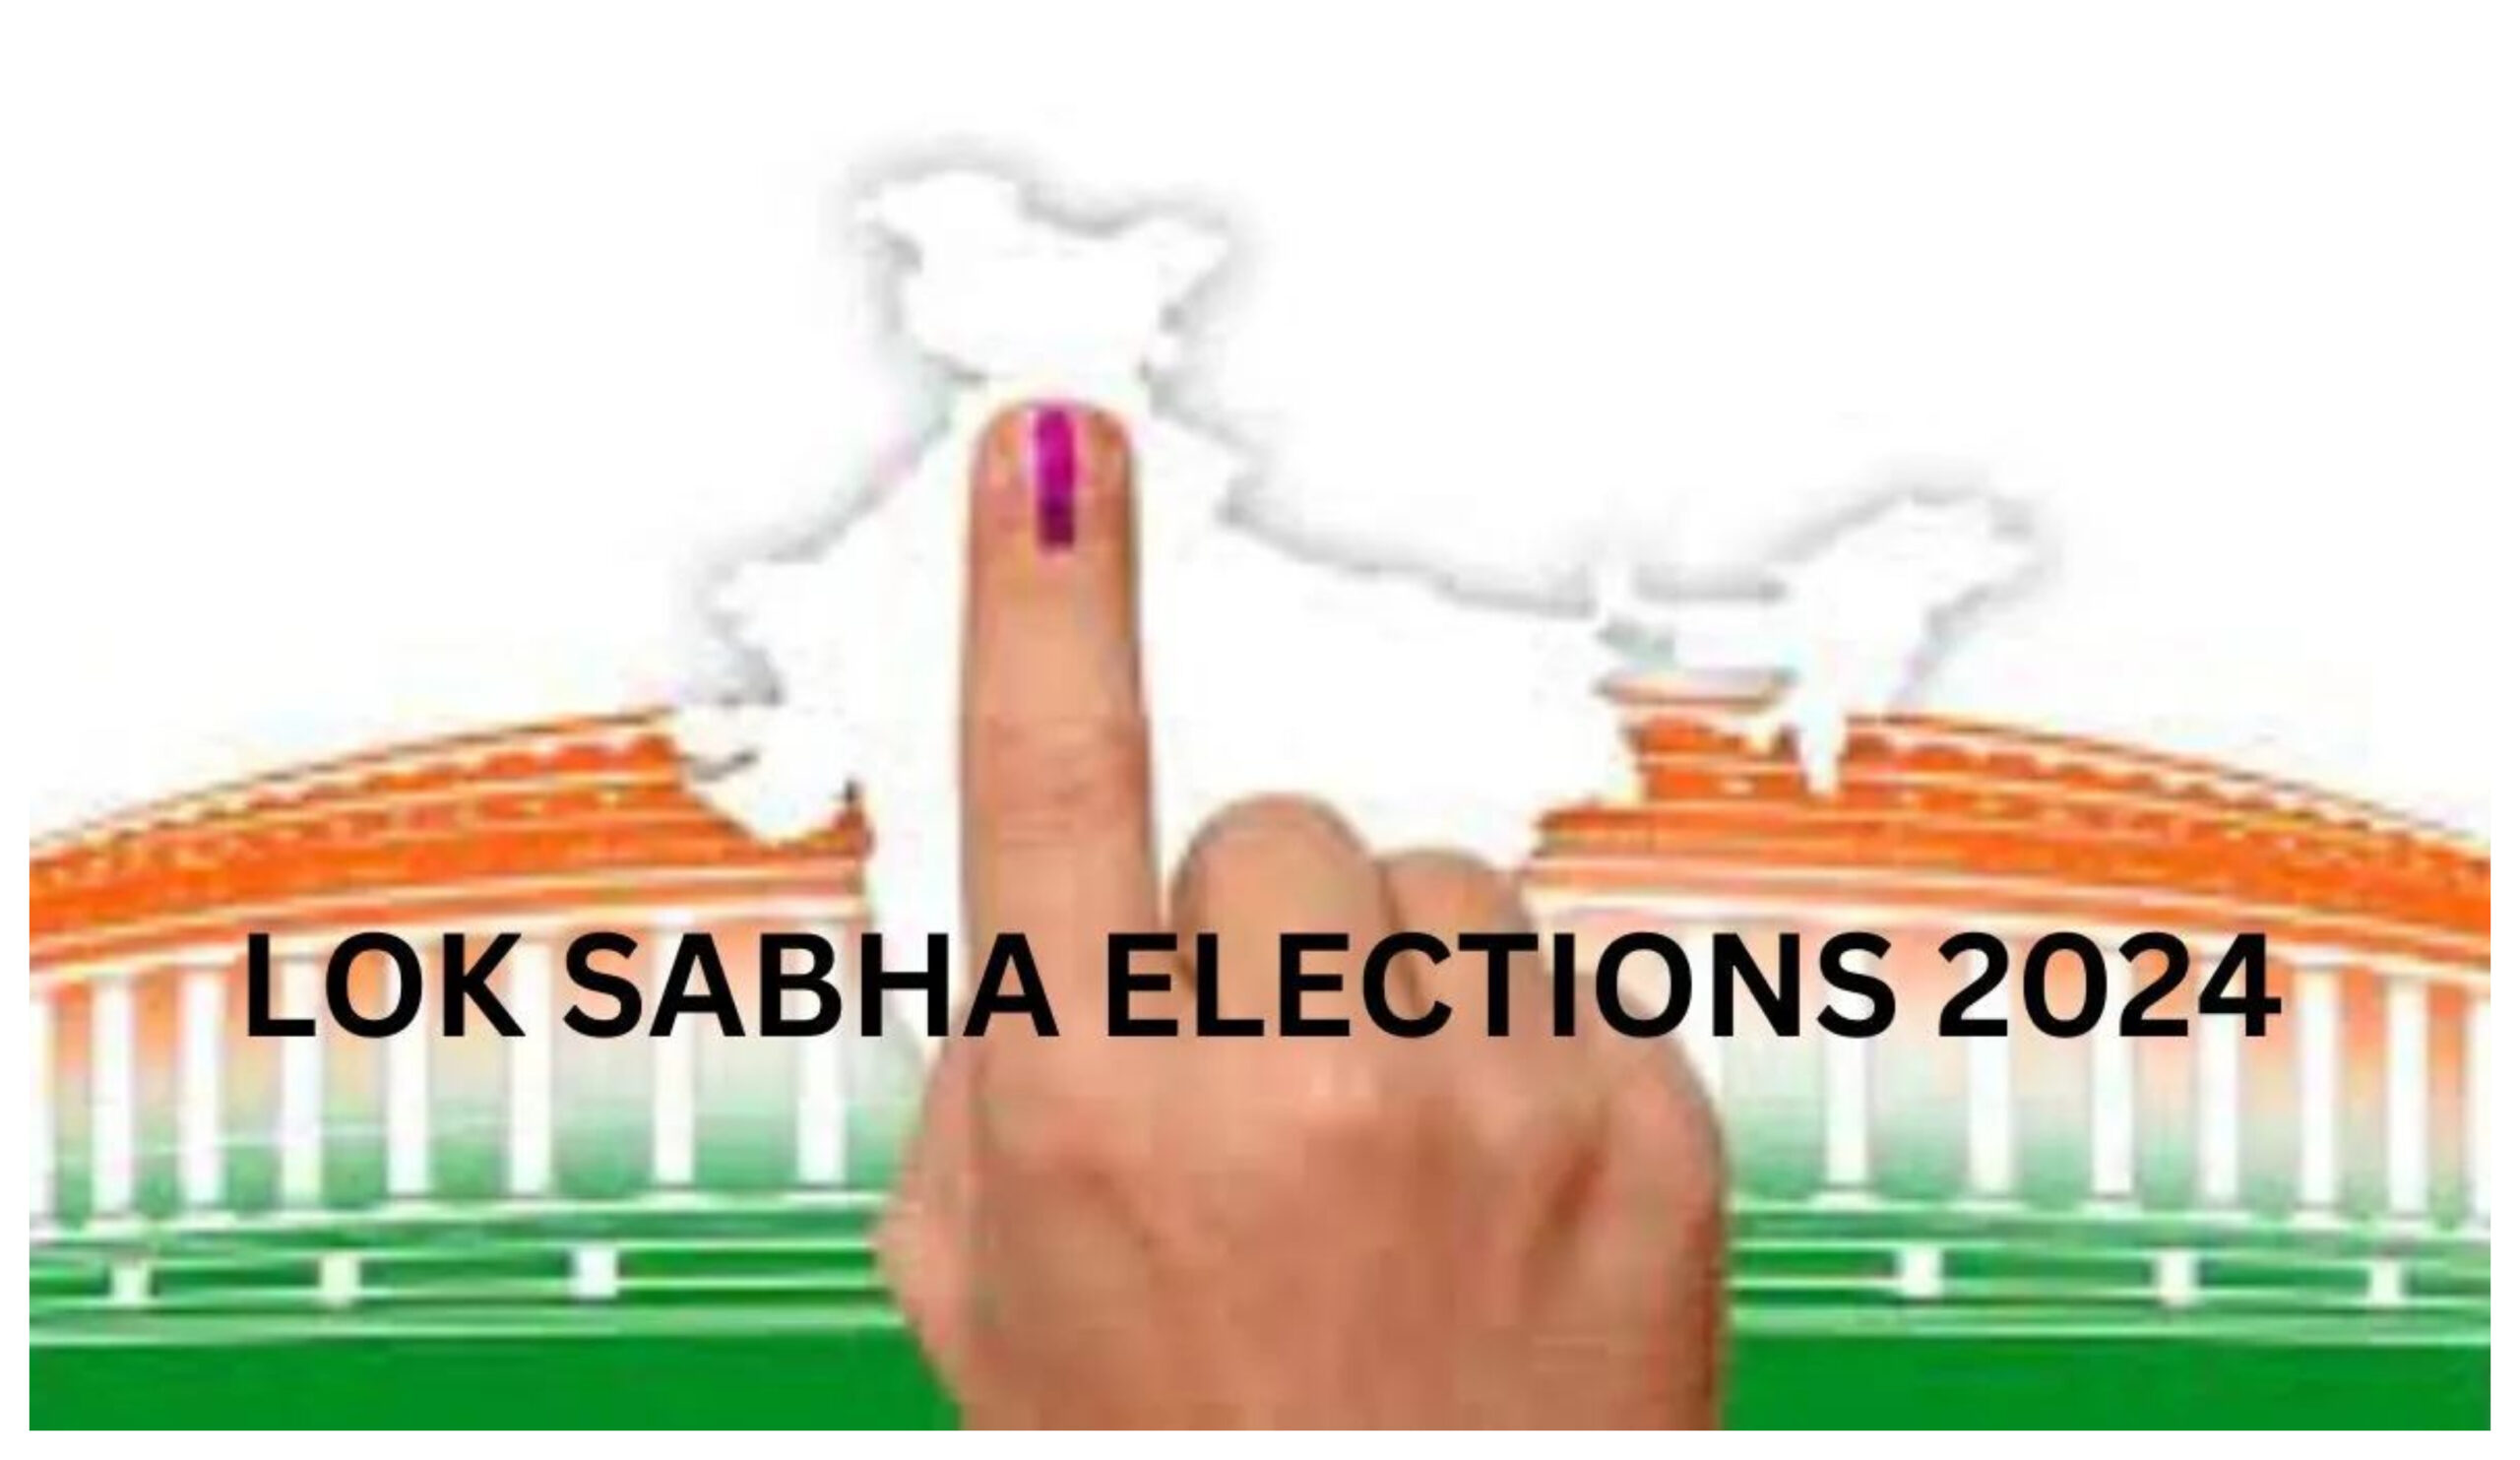 lok-sabha-election-electoral-equation-of-hyderabad-old-lok-sabha-seat-of-telangana-loksabha-election, hyderabad, politics news in hindi